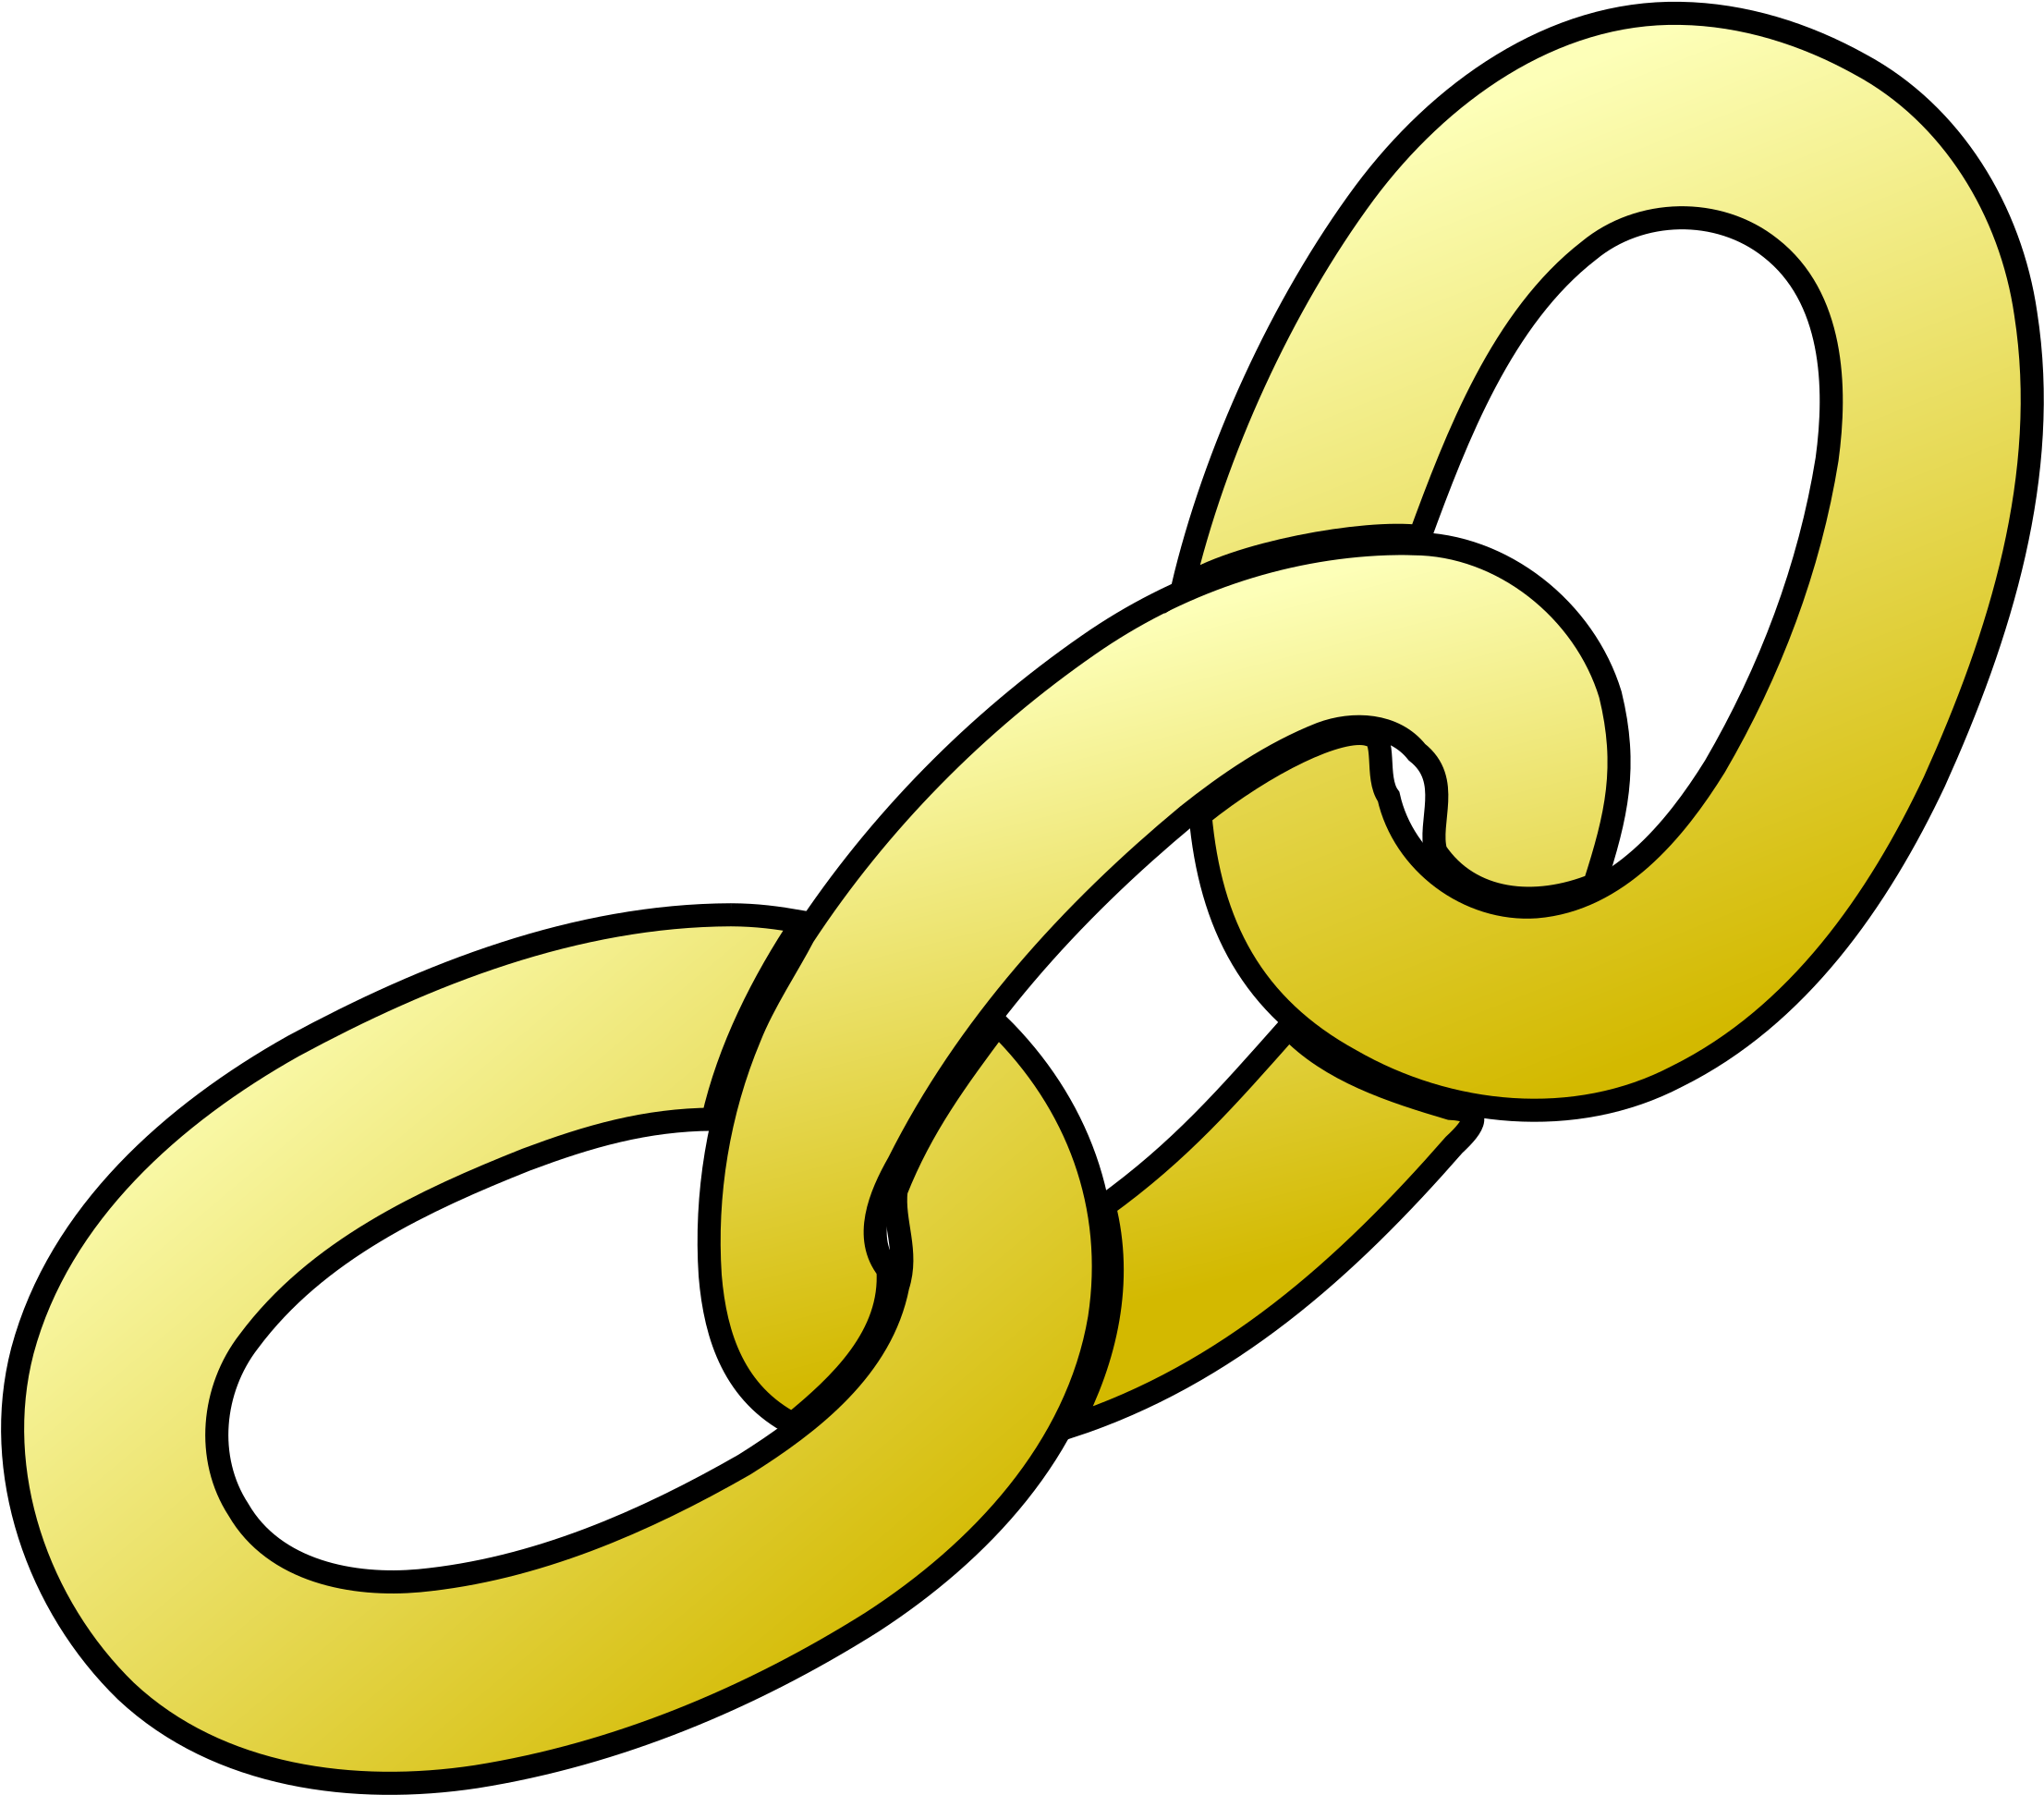 Chain Link Nicubunu Open Clip Art - Chain Link Nicubunu Open Clip Art (2400x2400)